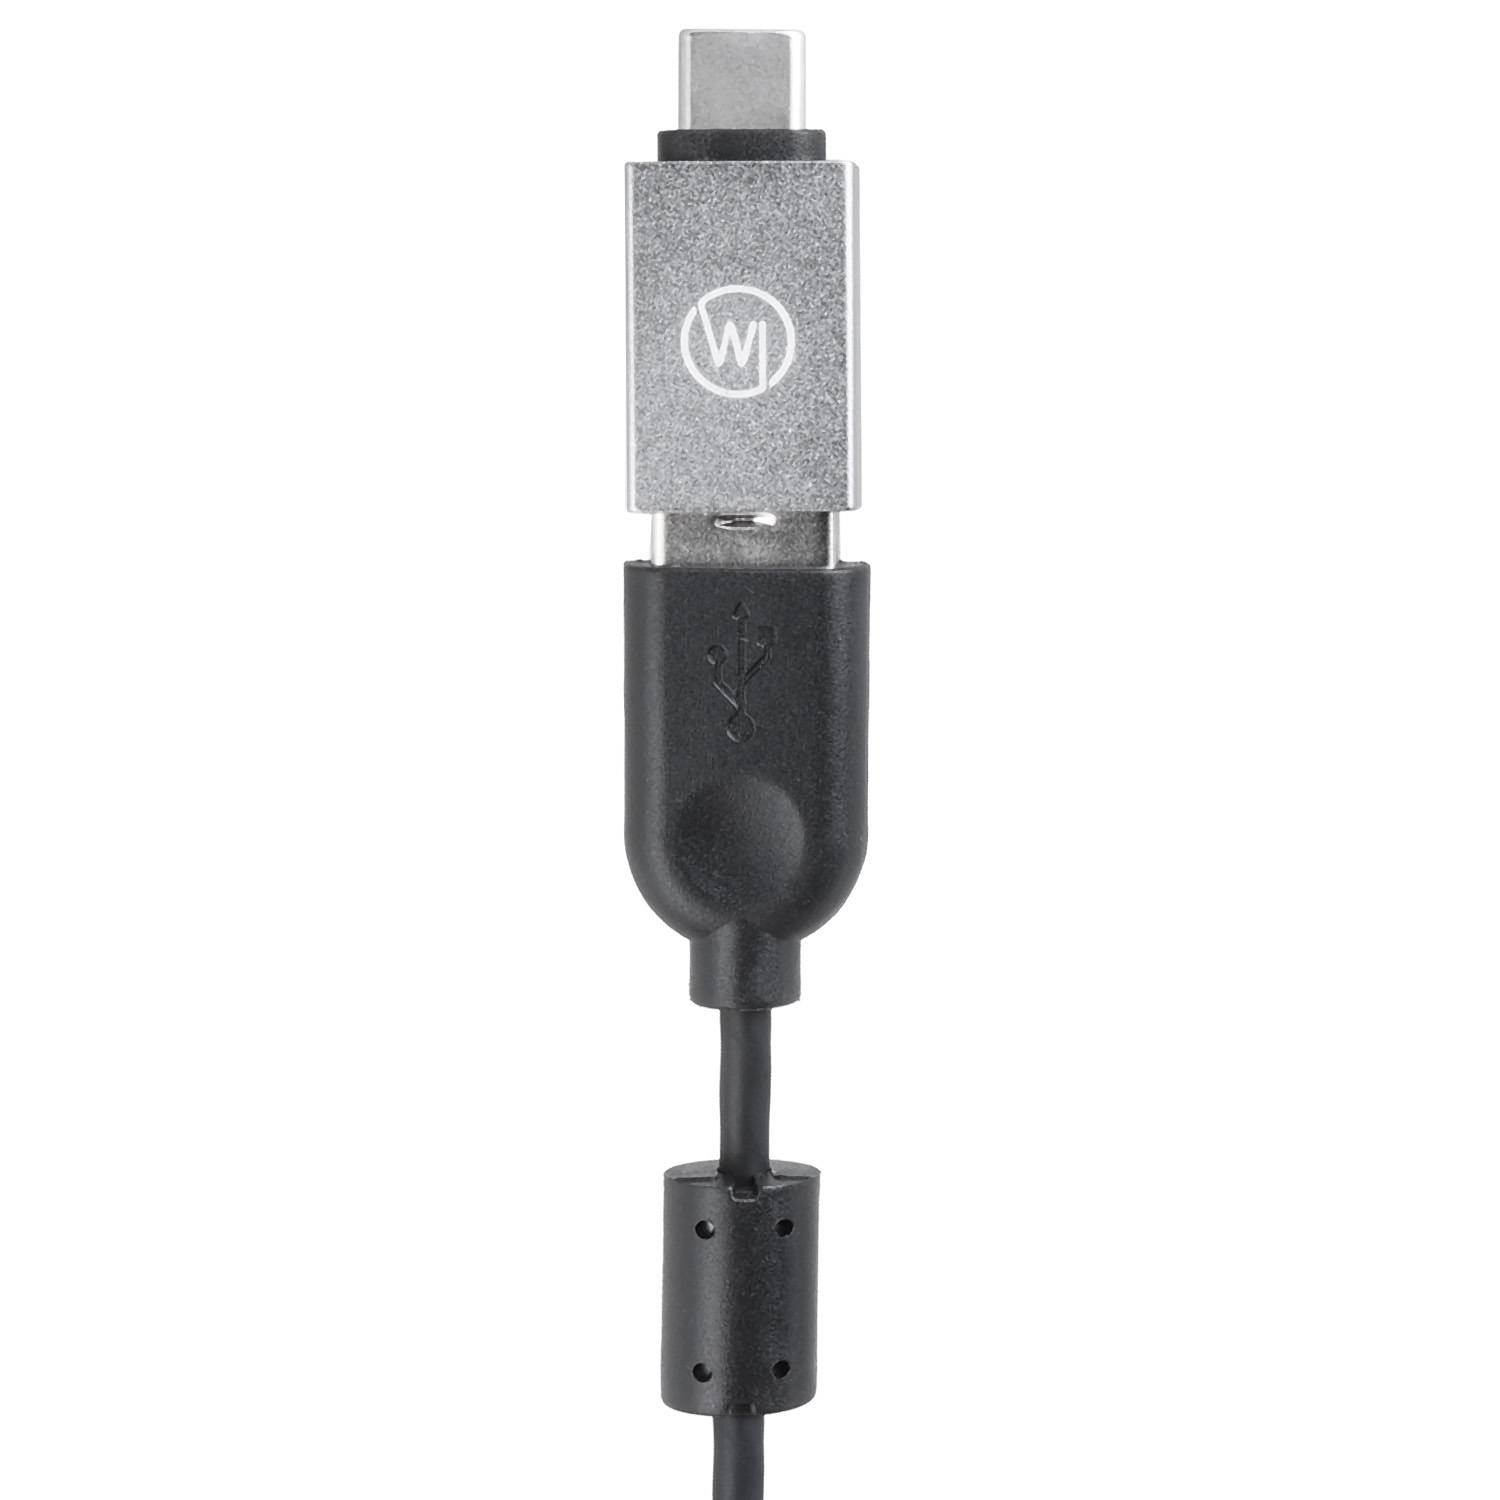 für WICKED für und Teaisiy, HD CHILI Universal Logitech, Adapter Webcams mit Nulaxy USB-C Adapter Jelly-Comb, Laptop USB